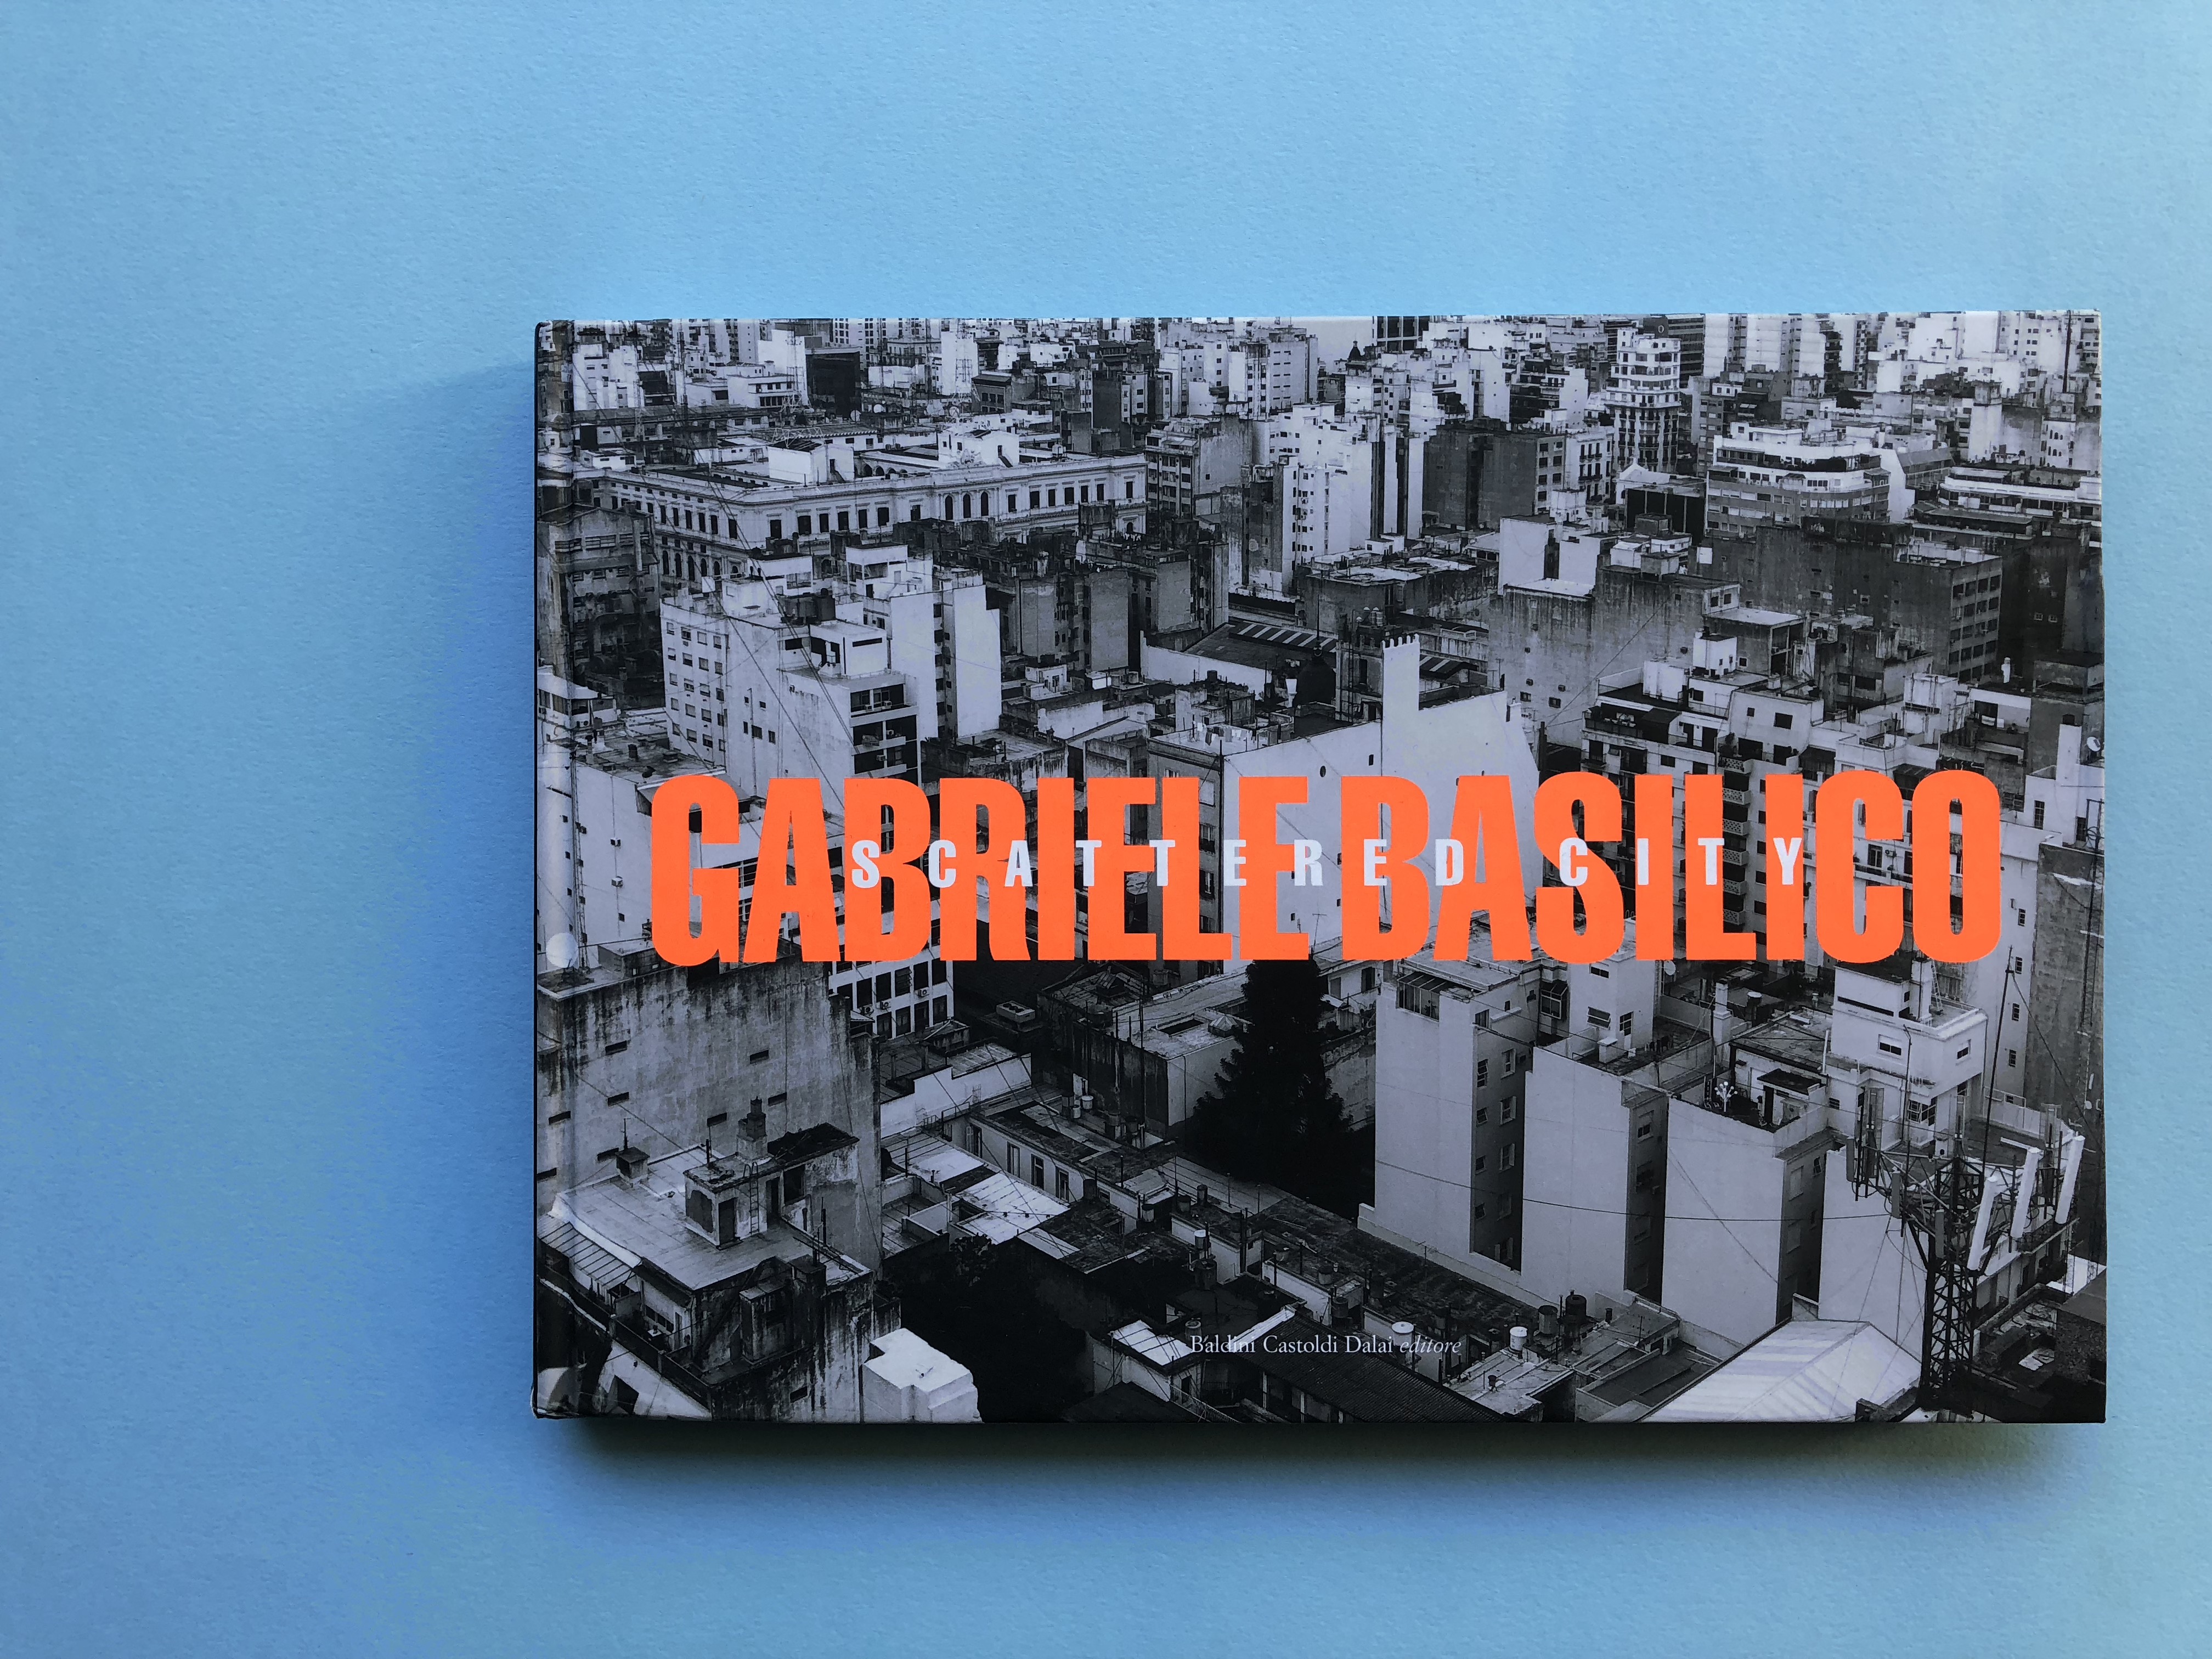 SCRATTERED CITY / GABRIELE BASILICO